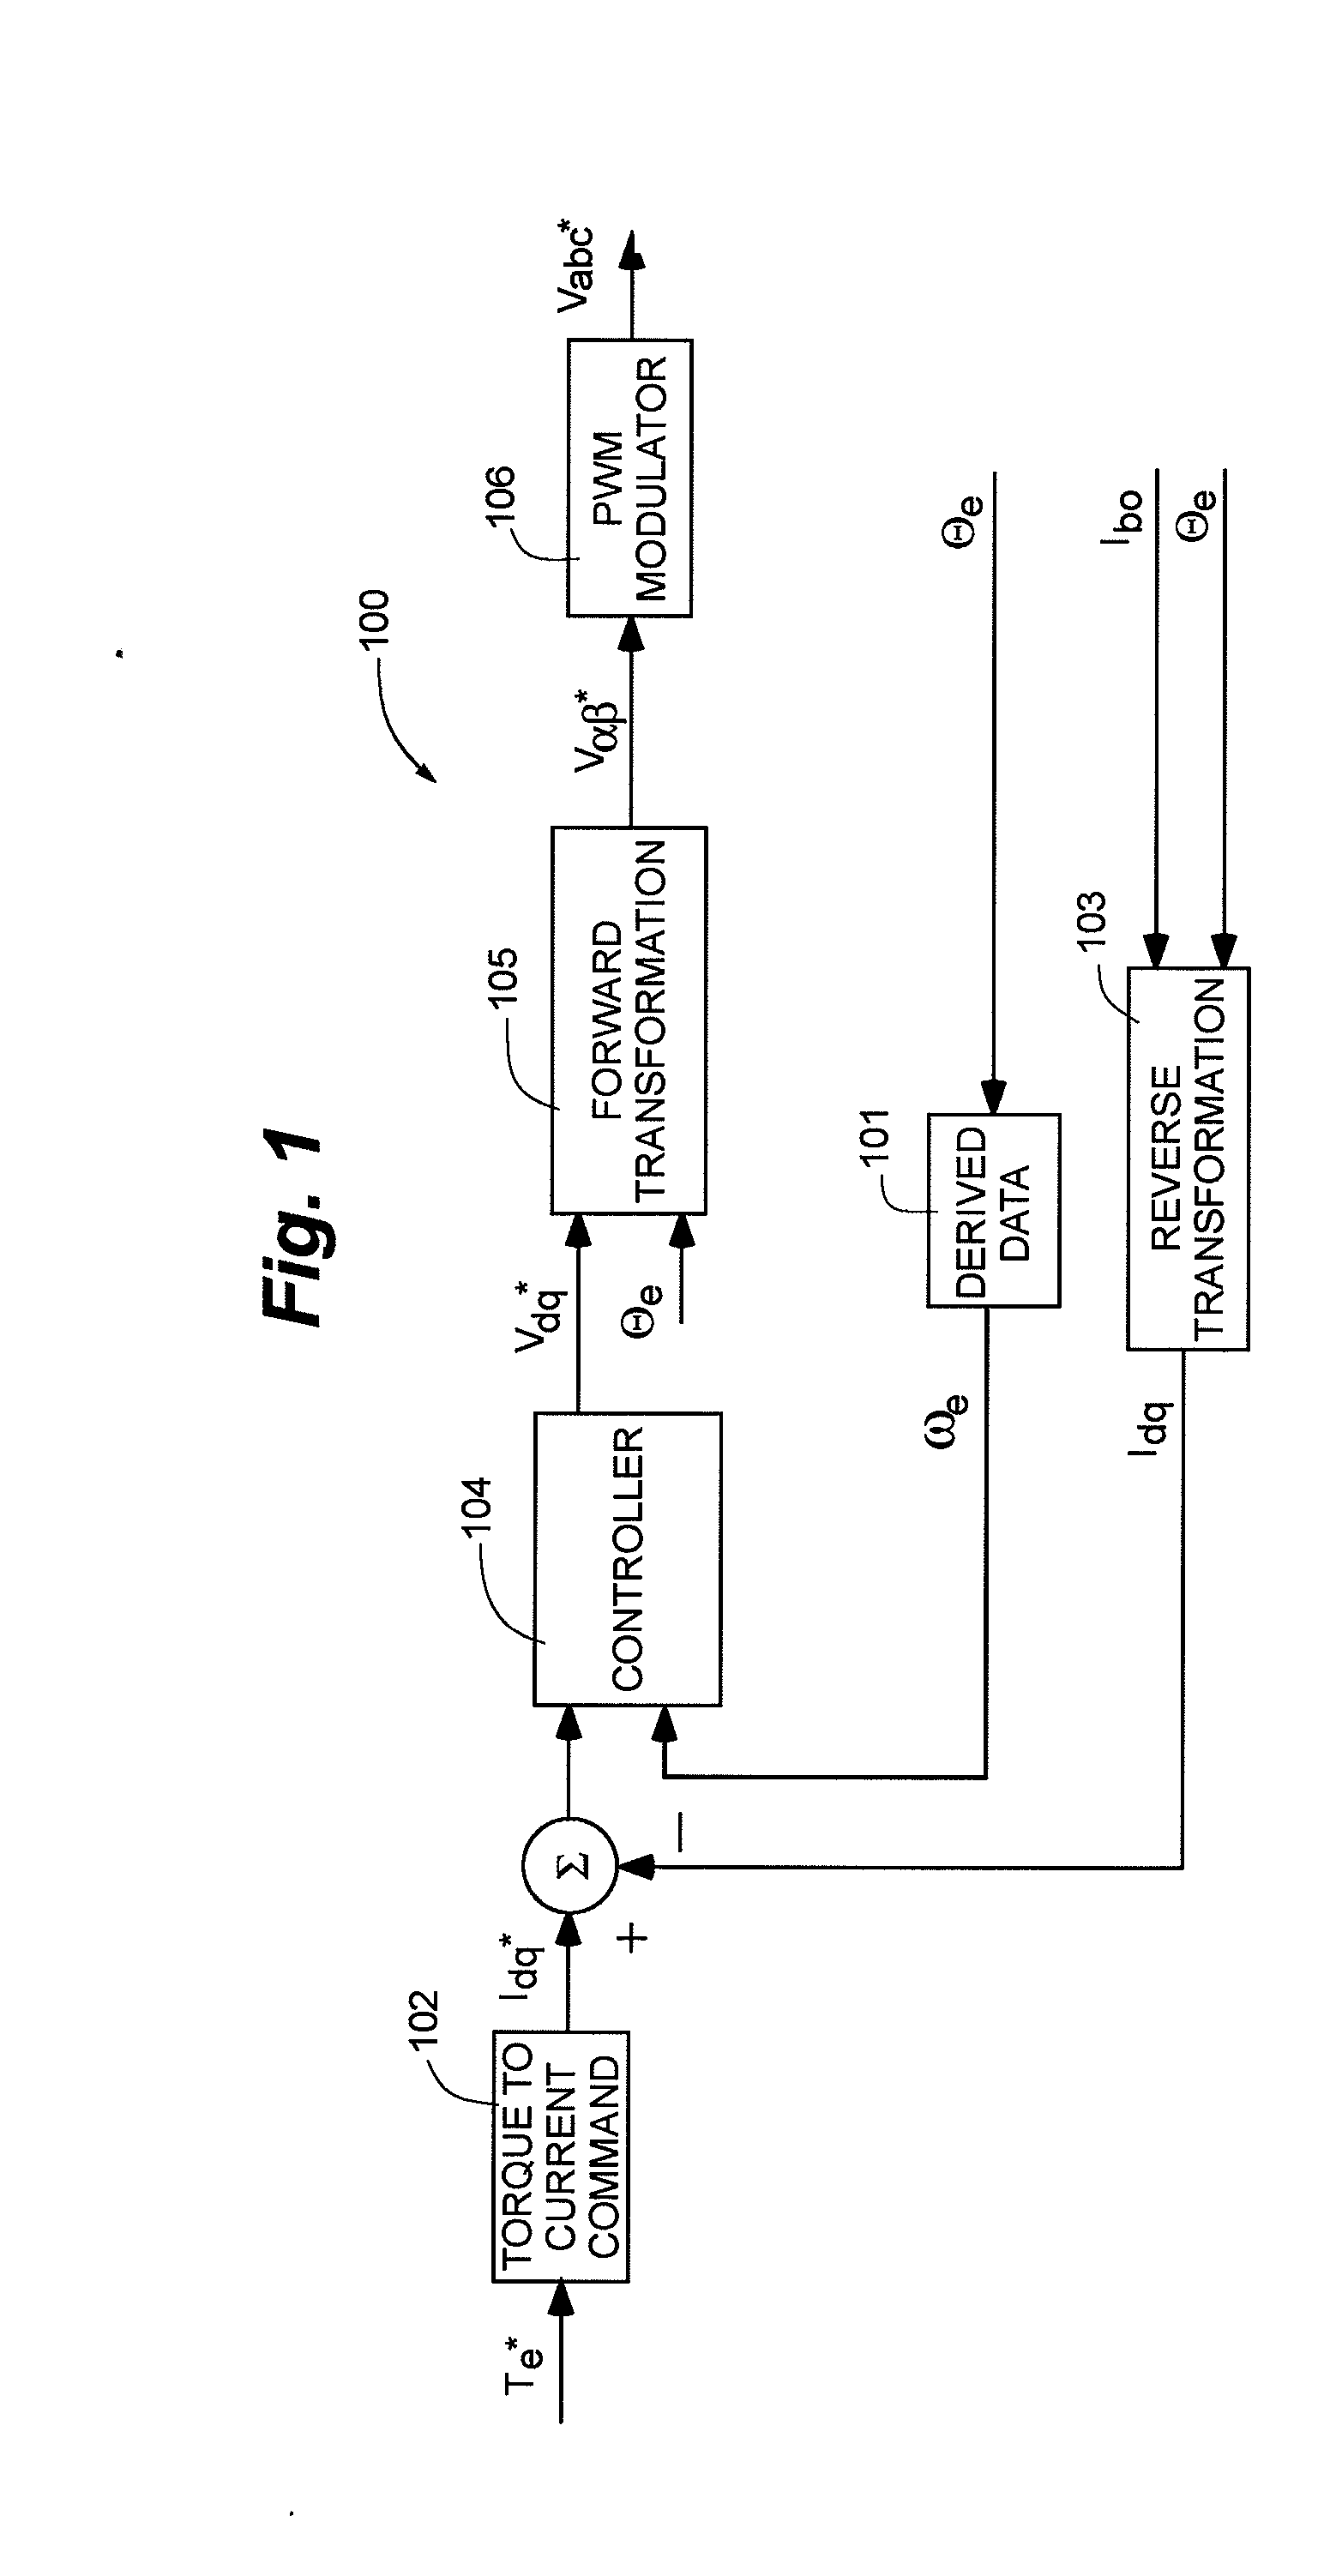 Nonlinear motor control techniques